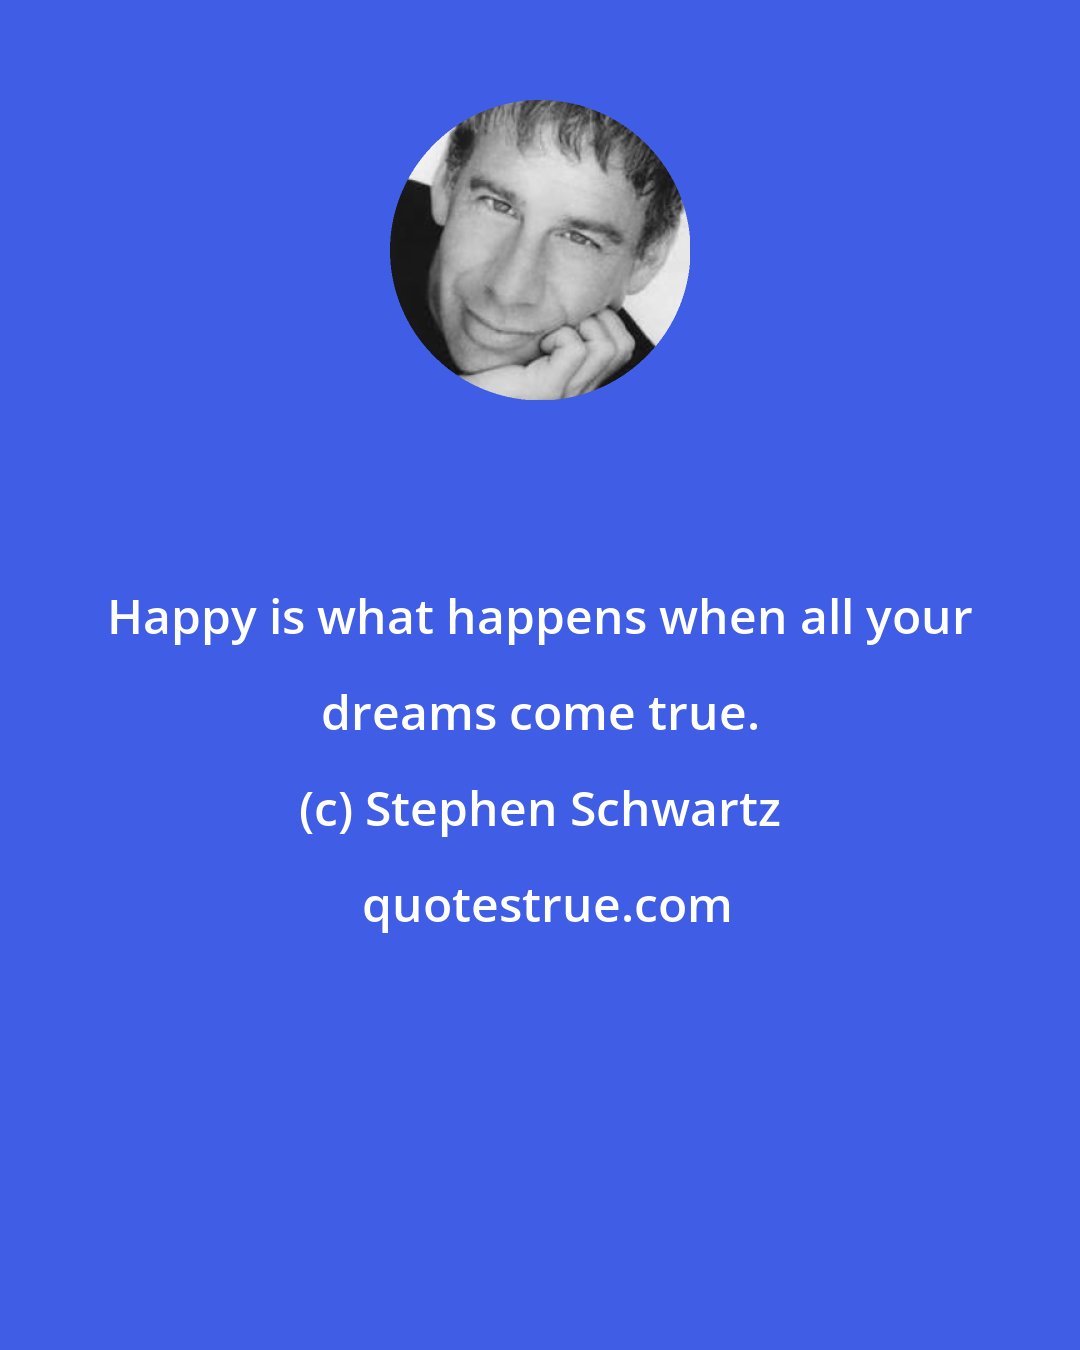 Stephen Schwartz: Happy is what happens when all your dreams come true.